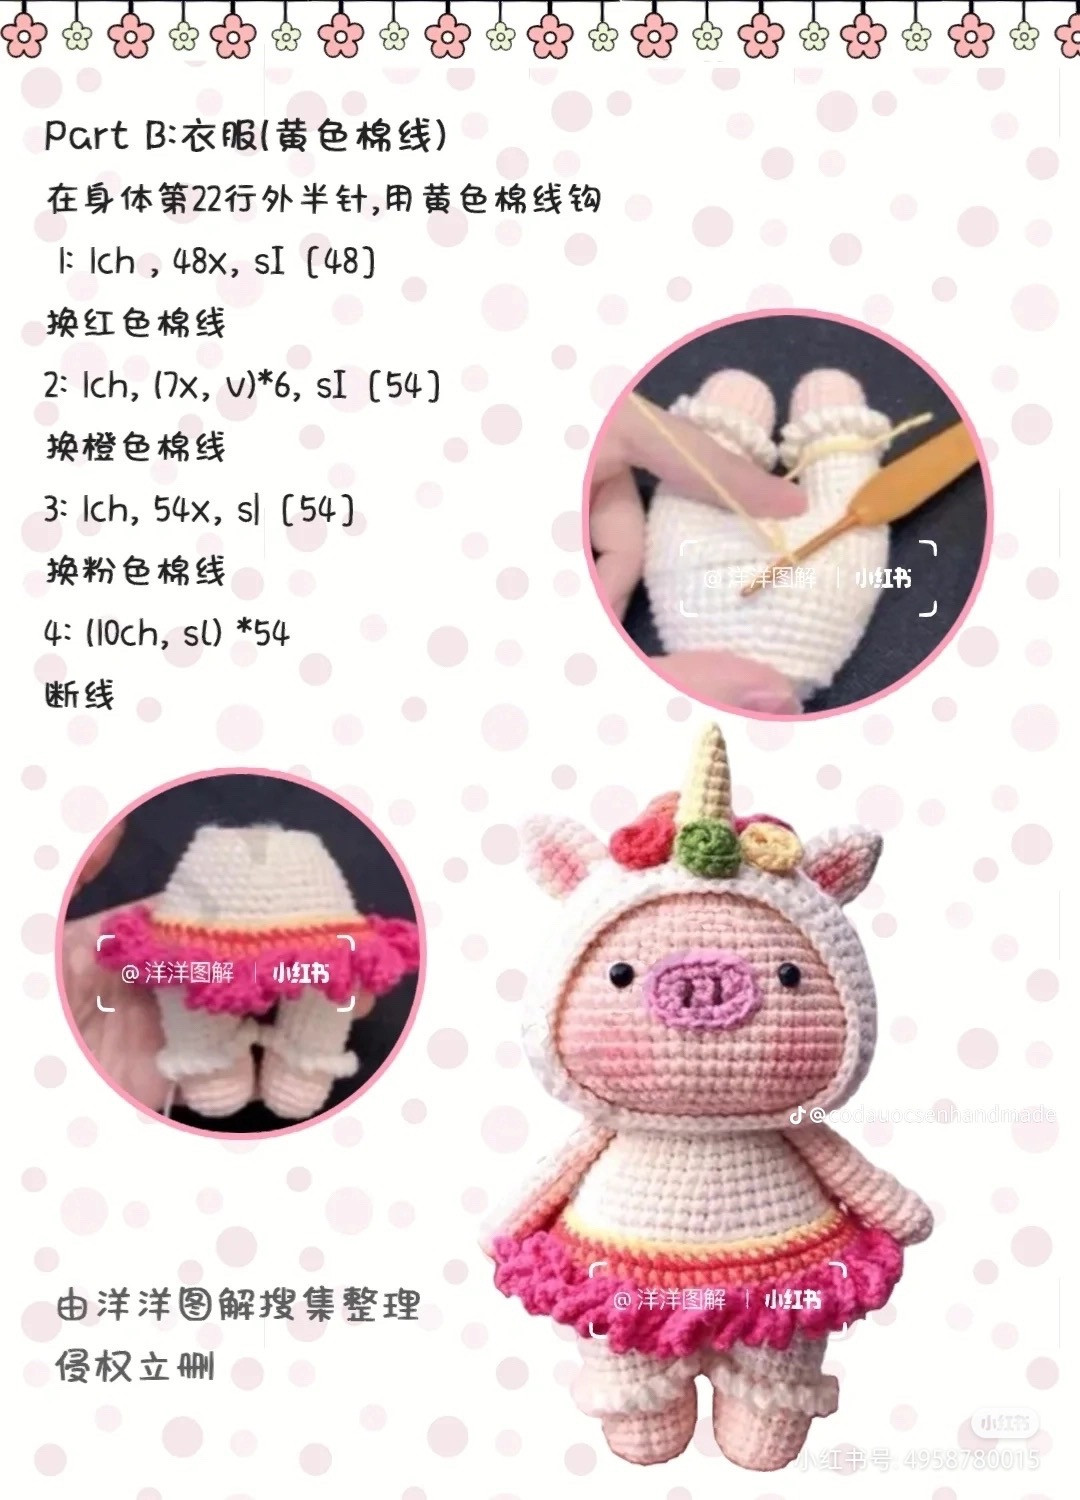 Unicorn cosplay pig crochet pattern (part 2)